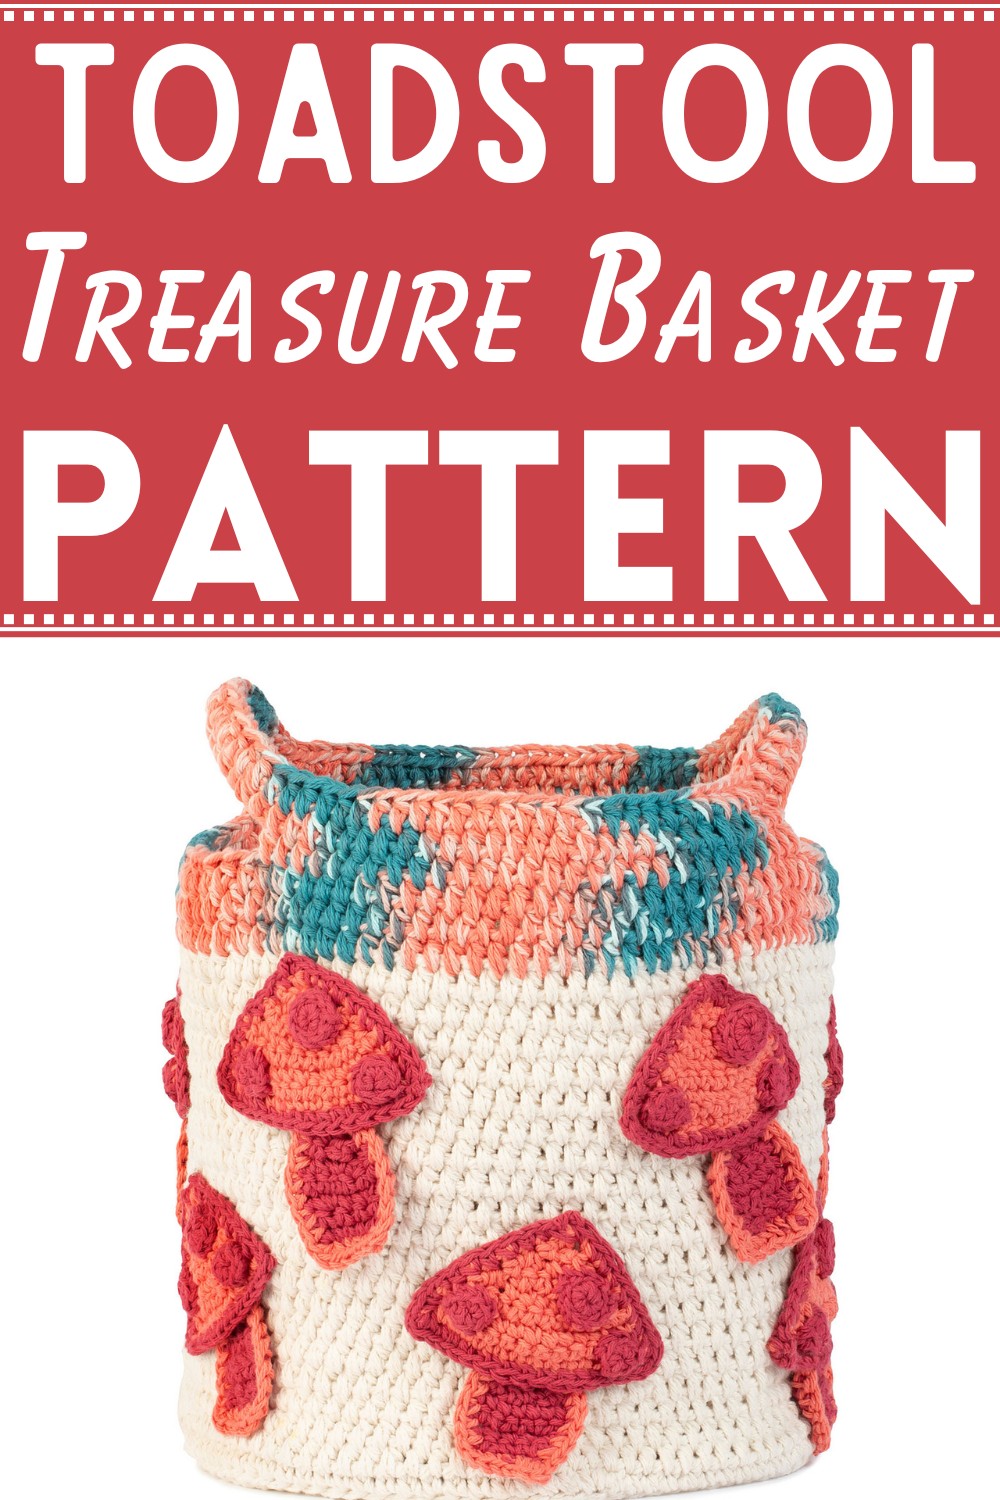 Toadstool Treasure Basket